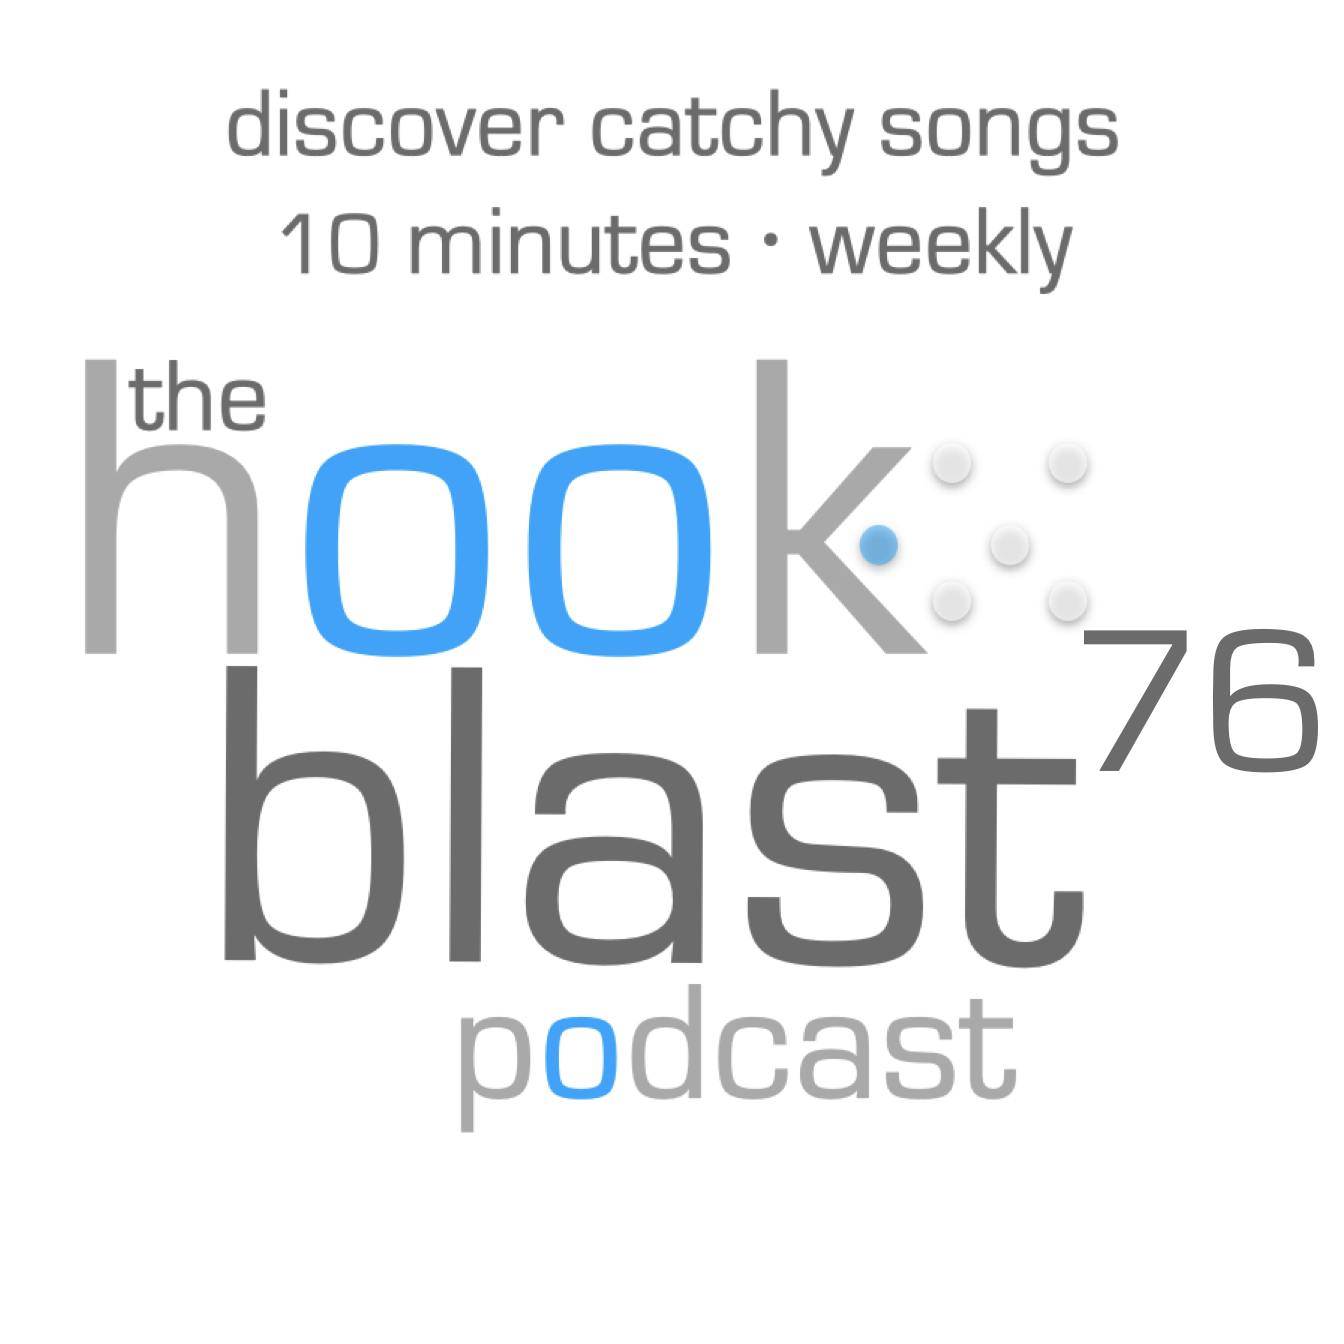 The Hookblast Podcast - Episode 76